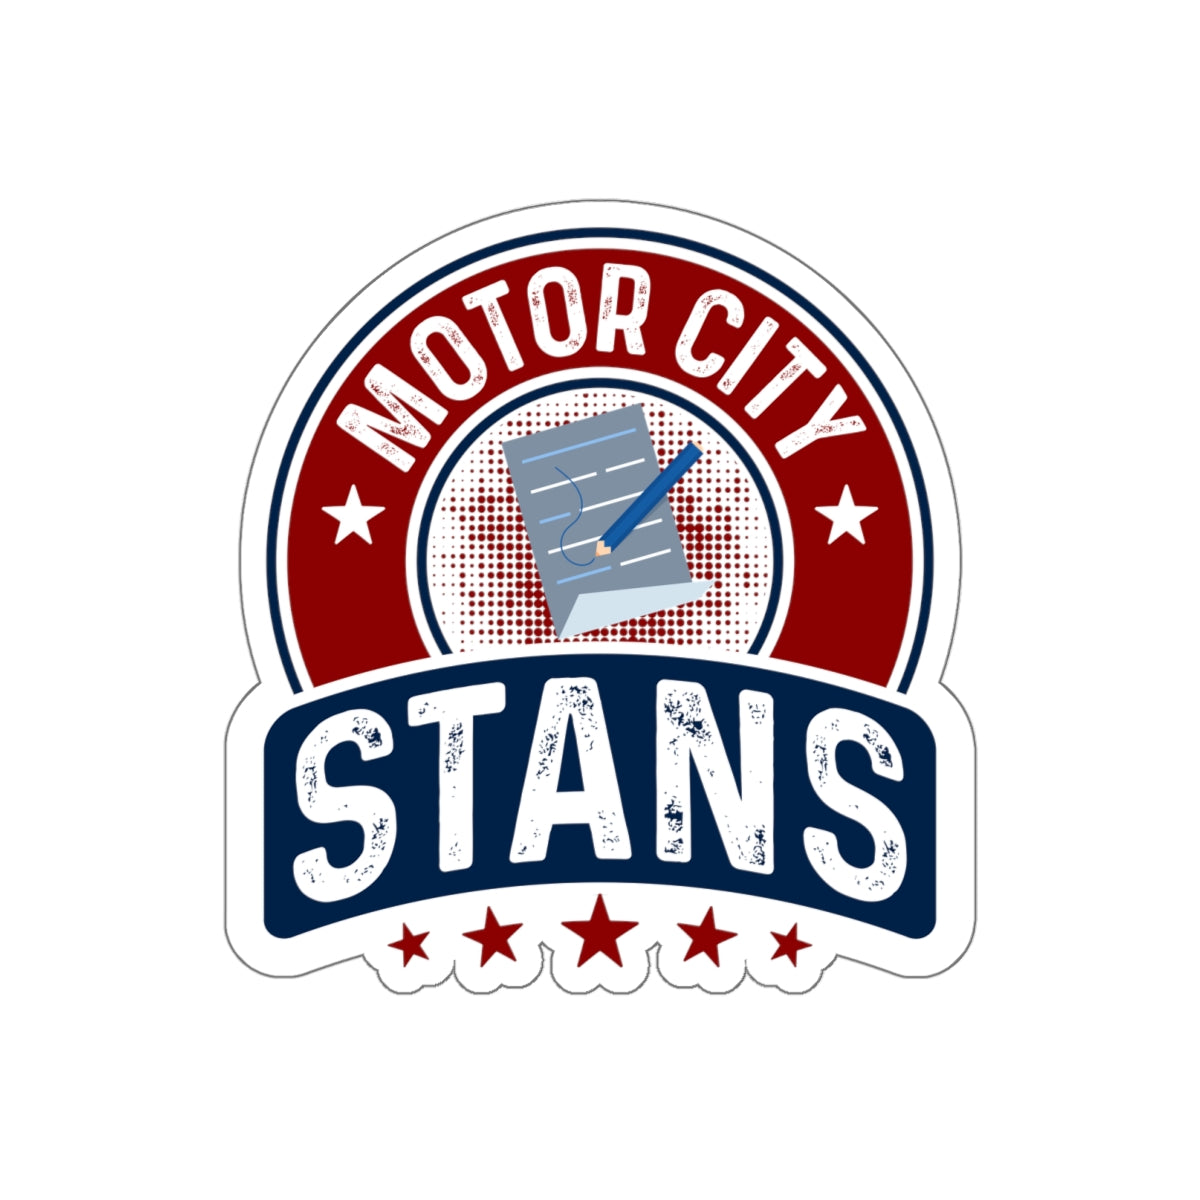 Motor City Stans Sticker